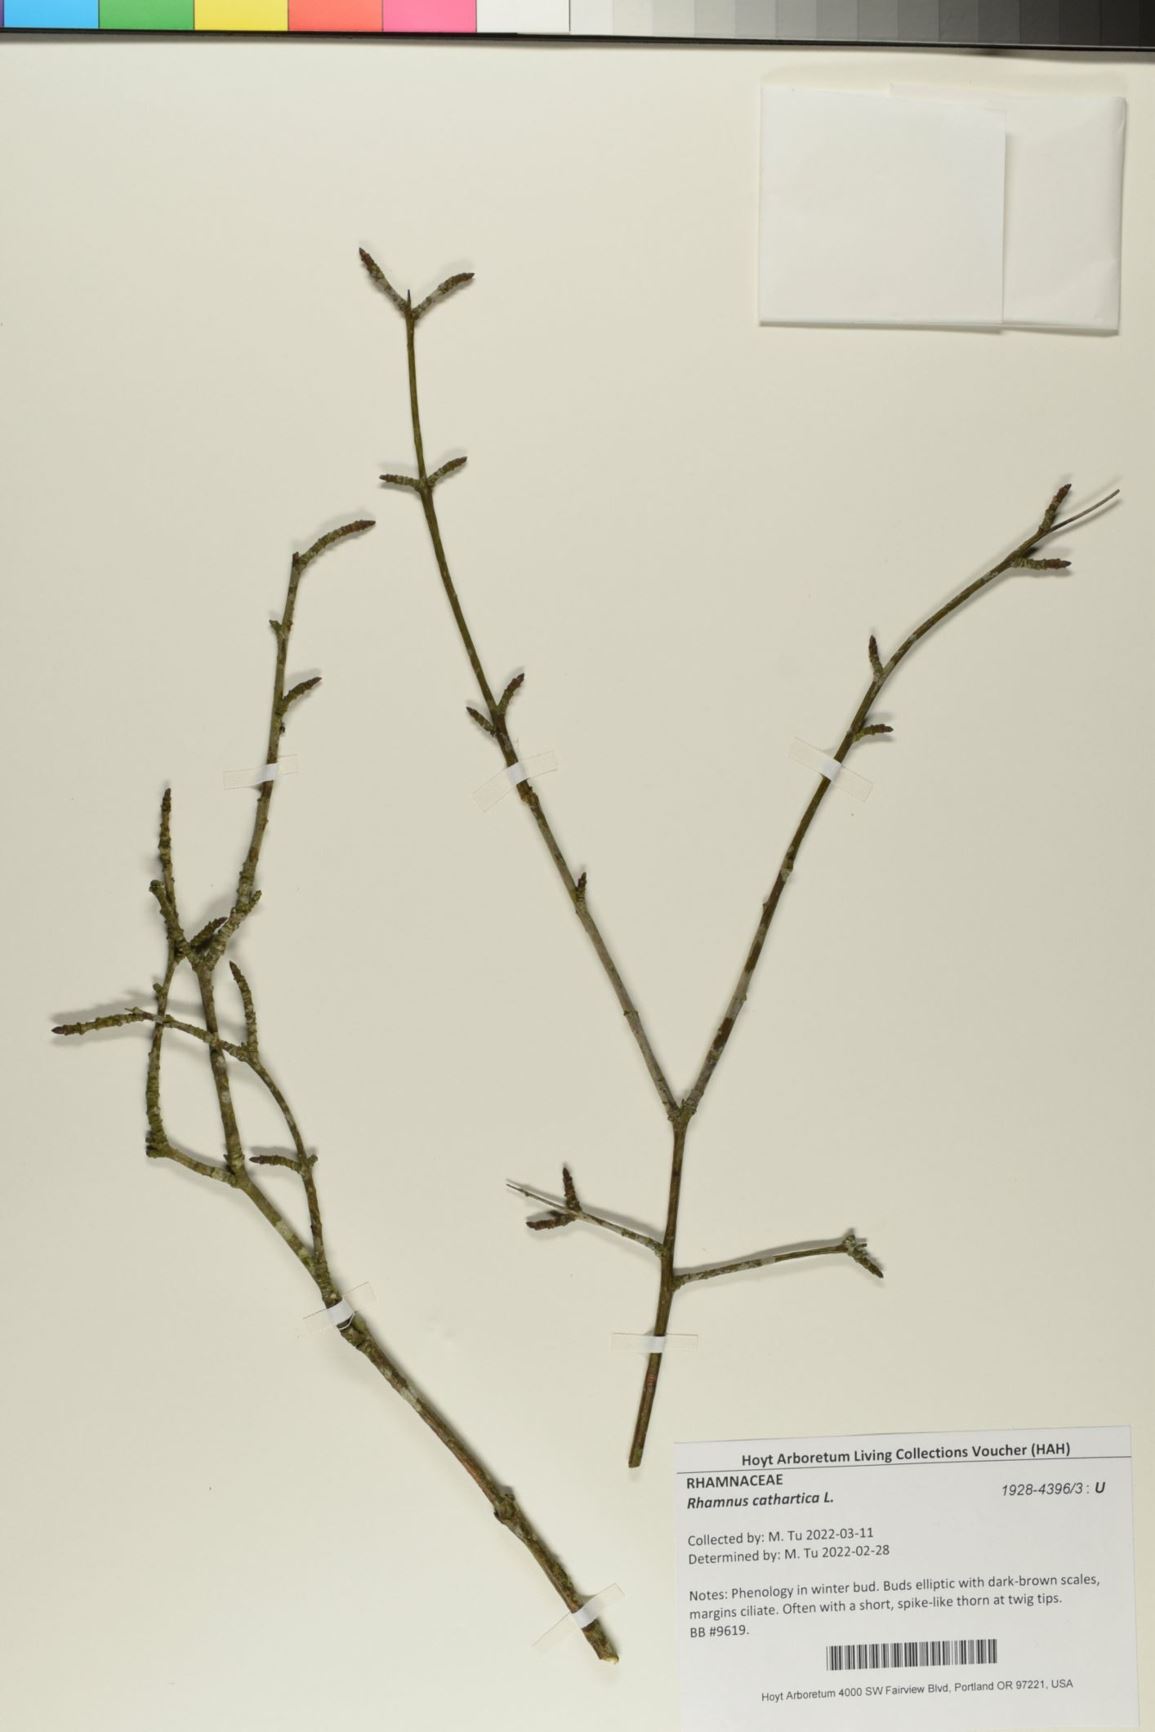 Rhamnus cathartica - Common Buckthorn, Carolina buckthorn, European buckthorn, European waythorn, Hart's thorn, nerprun cathartique